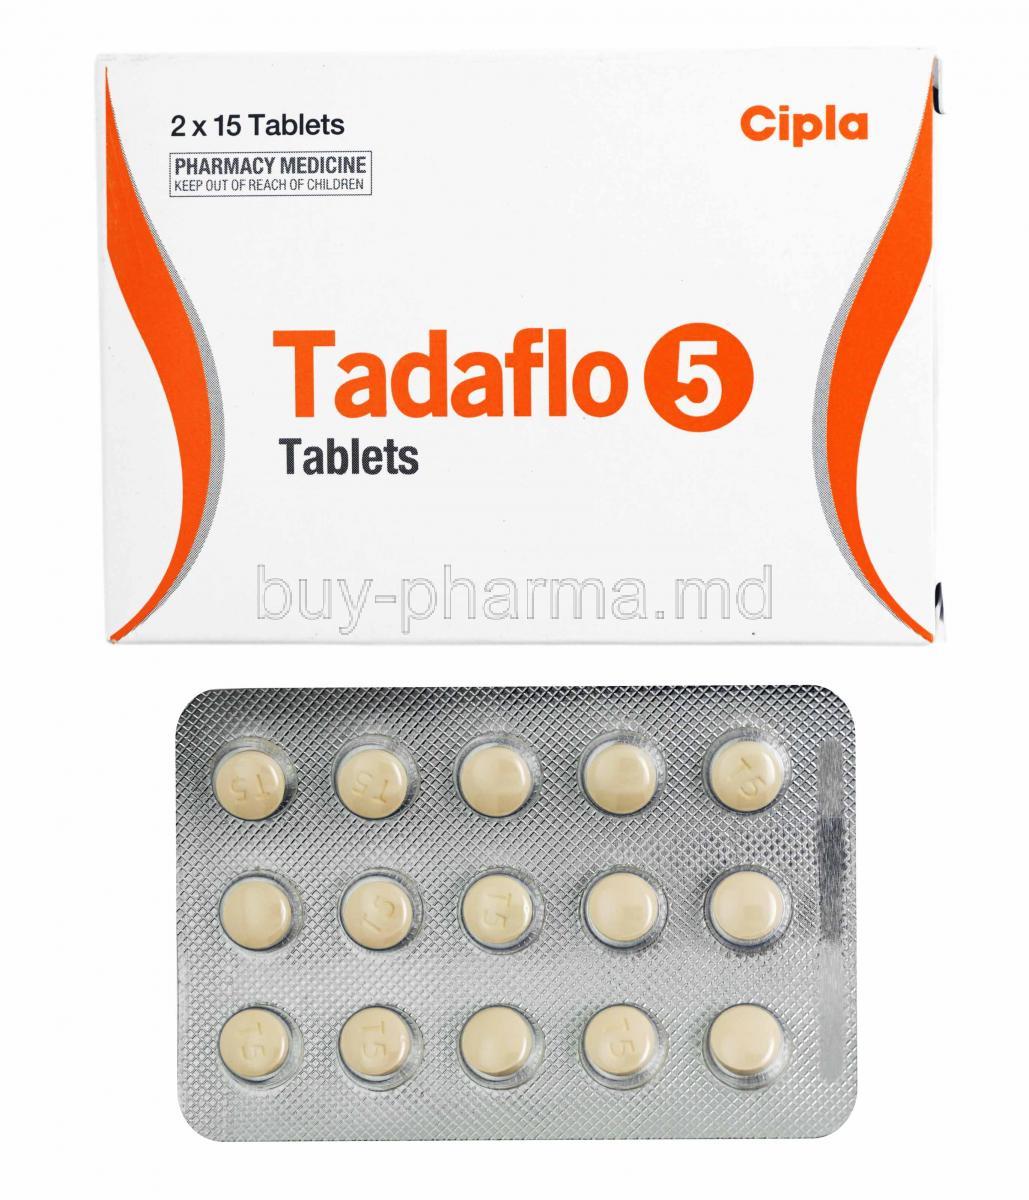 Tadaflo, Tadalafil 5mg box and tablets